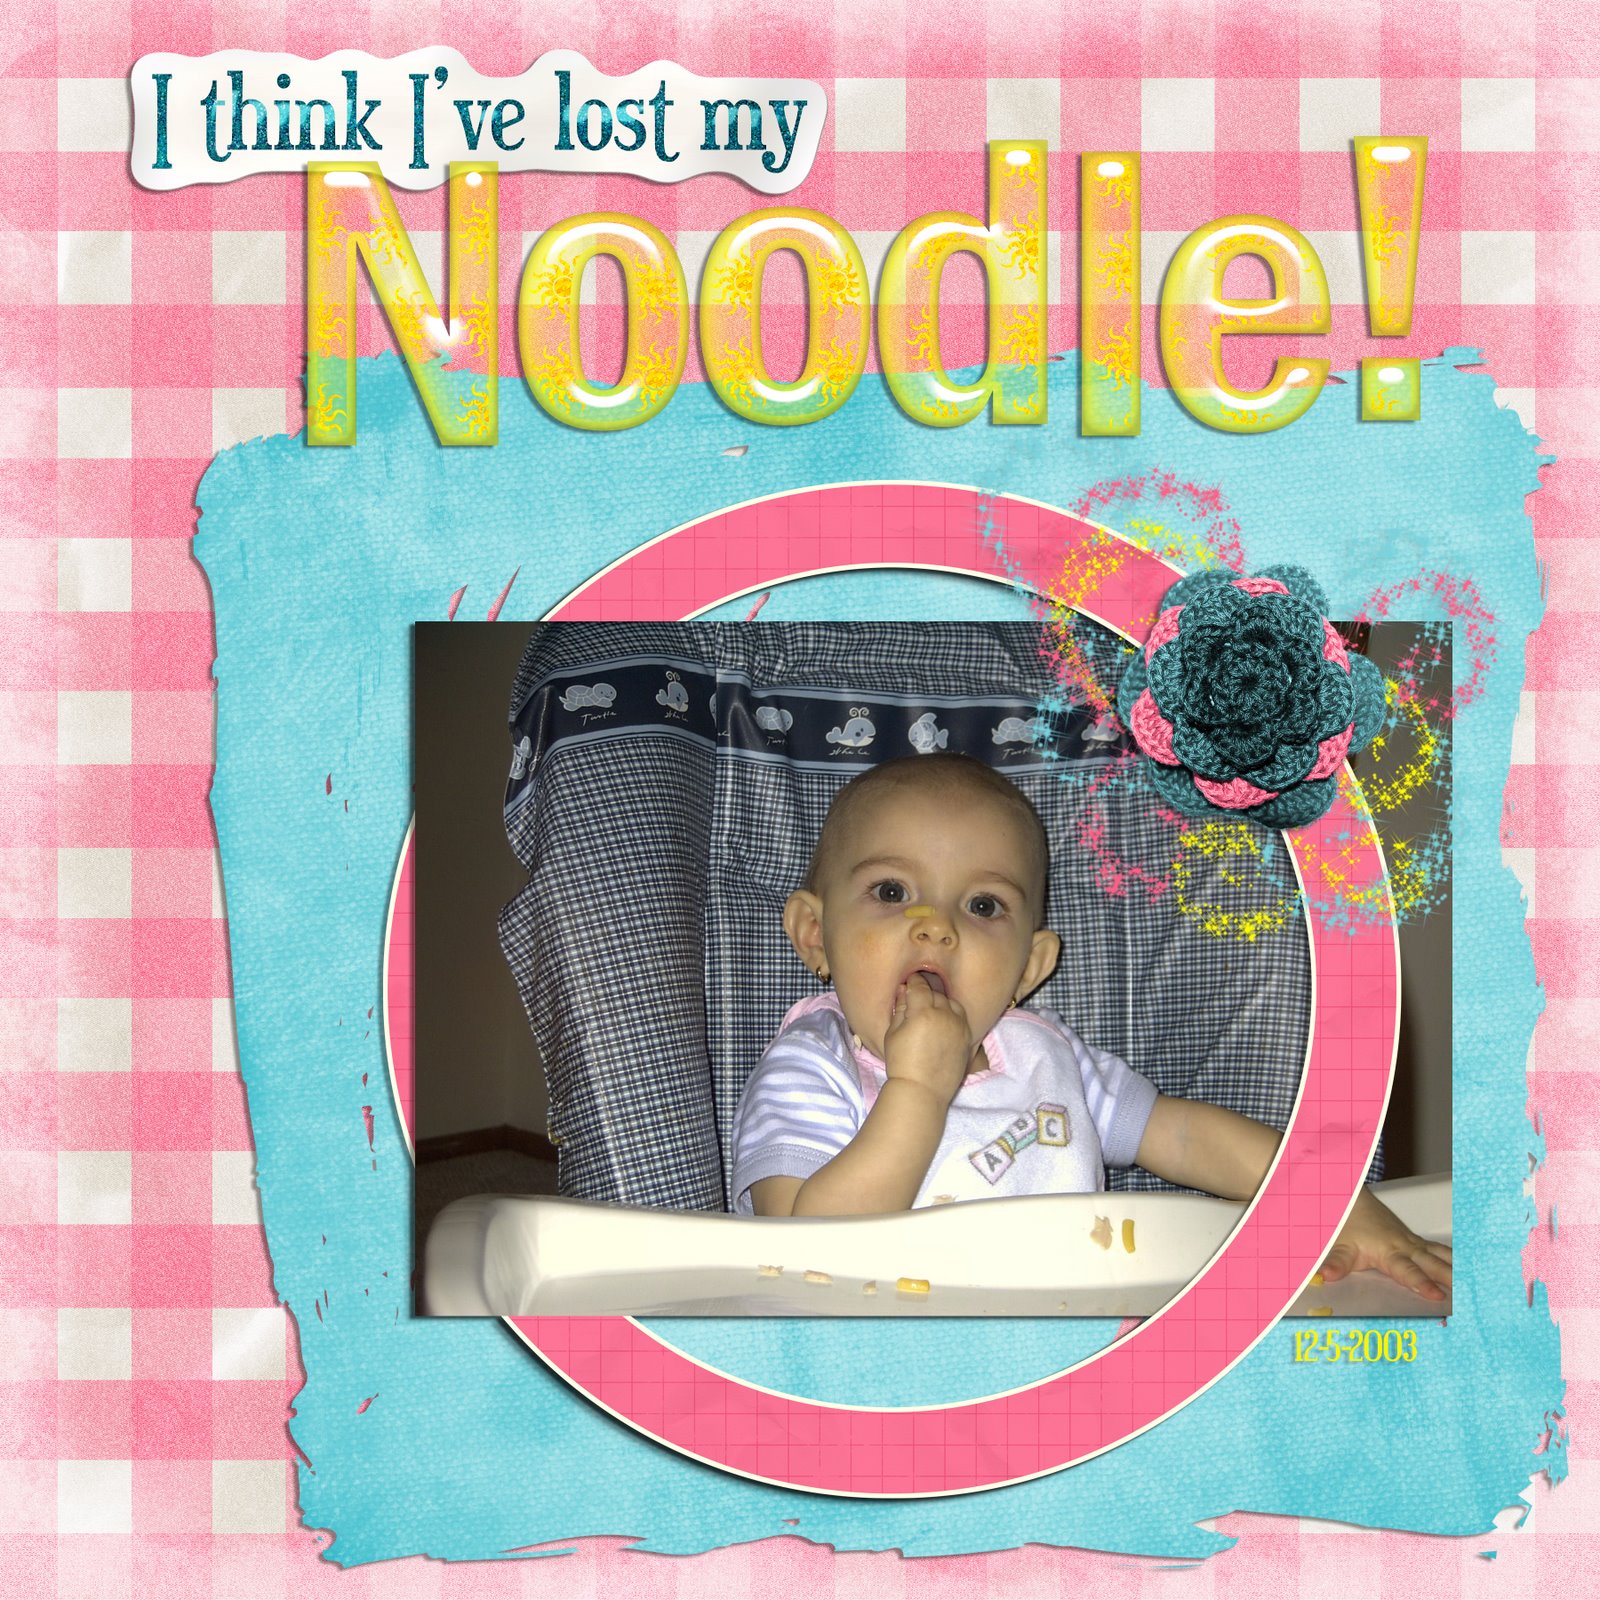 [lost+my+noodle.jpg]